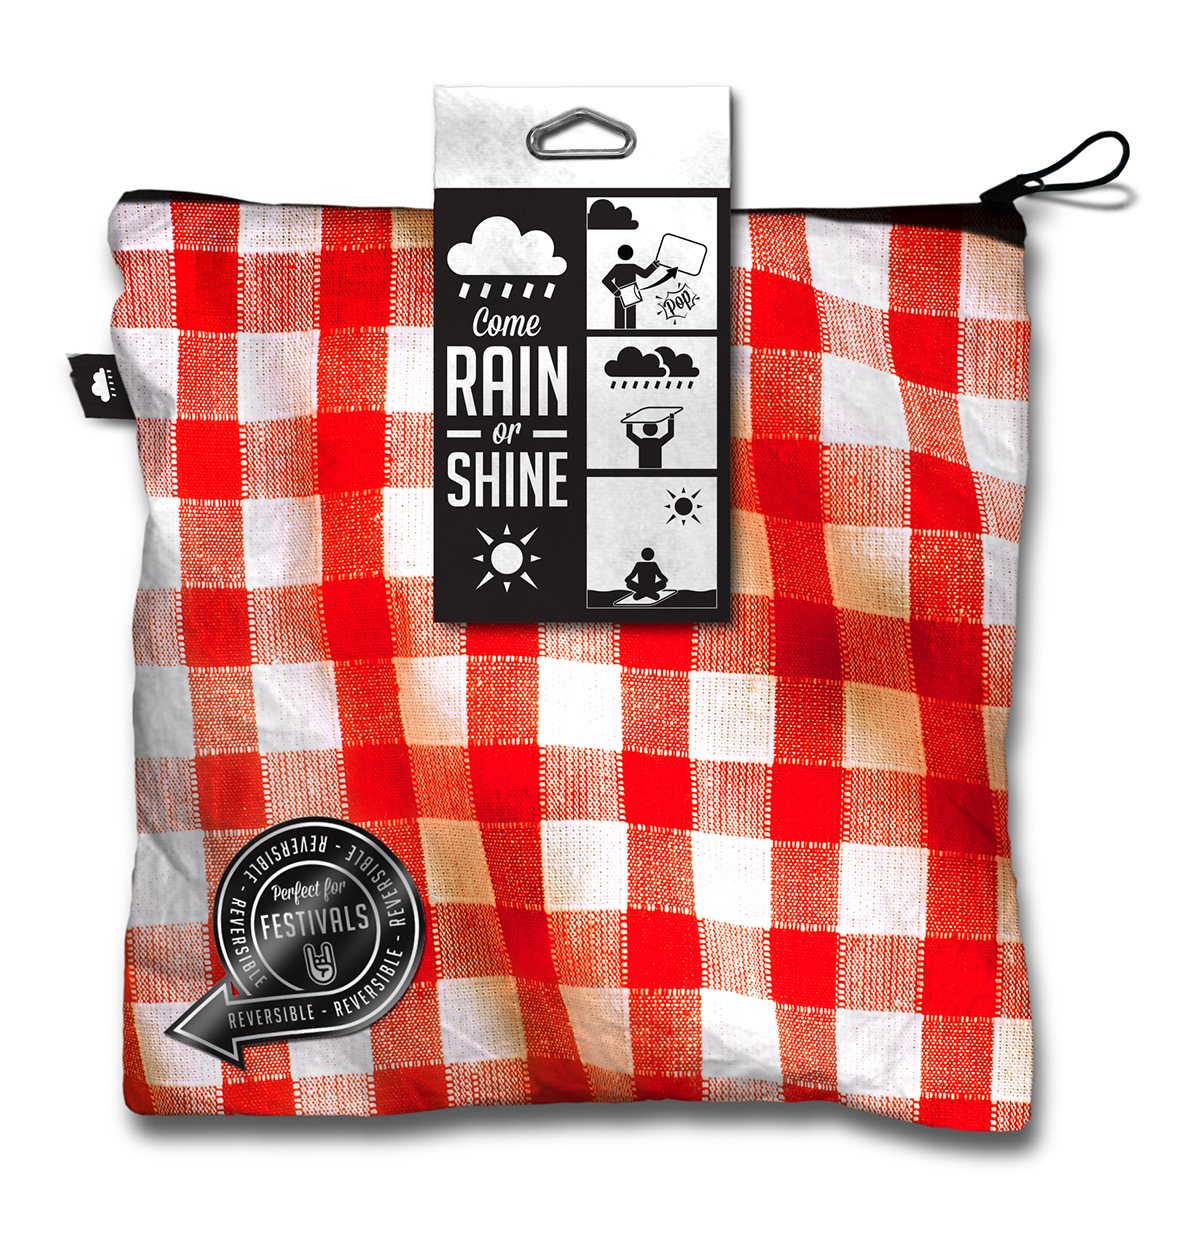 rain Sun festival summer winter Fun picnic picnik product bag newspaper news towel waterproof Umbrella